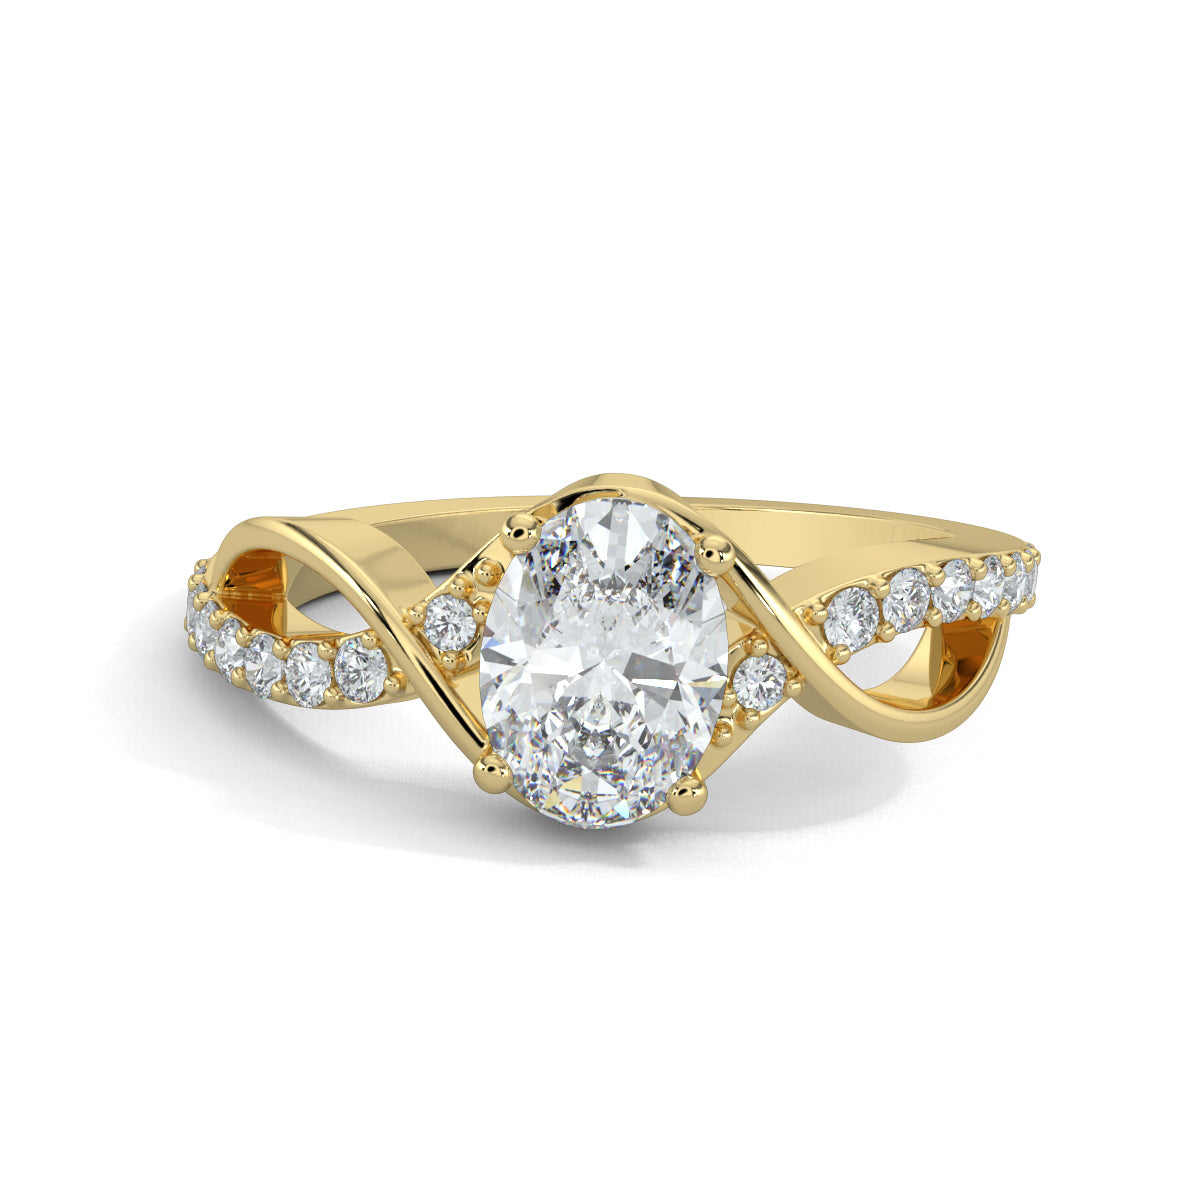 Yellow Gold, Diamond Ring, Natural diamond ring, Curvaceous Diamond Ring, Everyday Diamond Ring, Lab-Grown Diamonds, Oval Diamond, Intertwining Bands, Ethical Jewelry, Sustainable Luxury, Diamond Jewelry